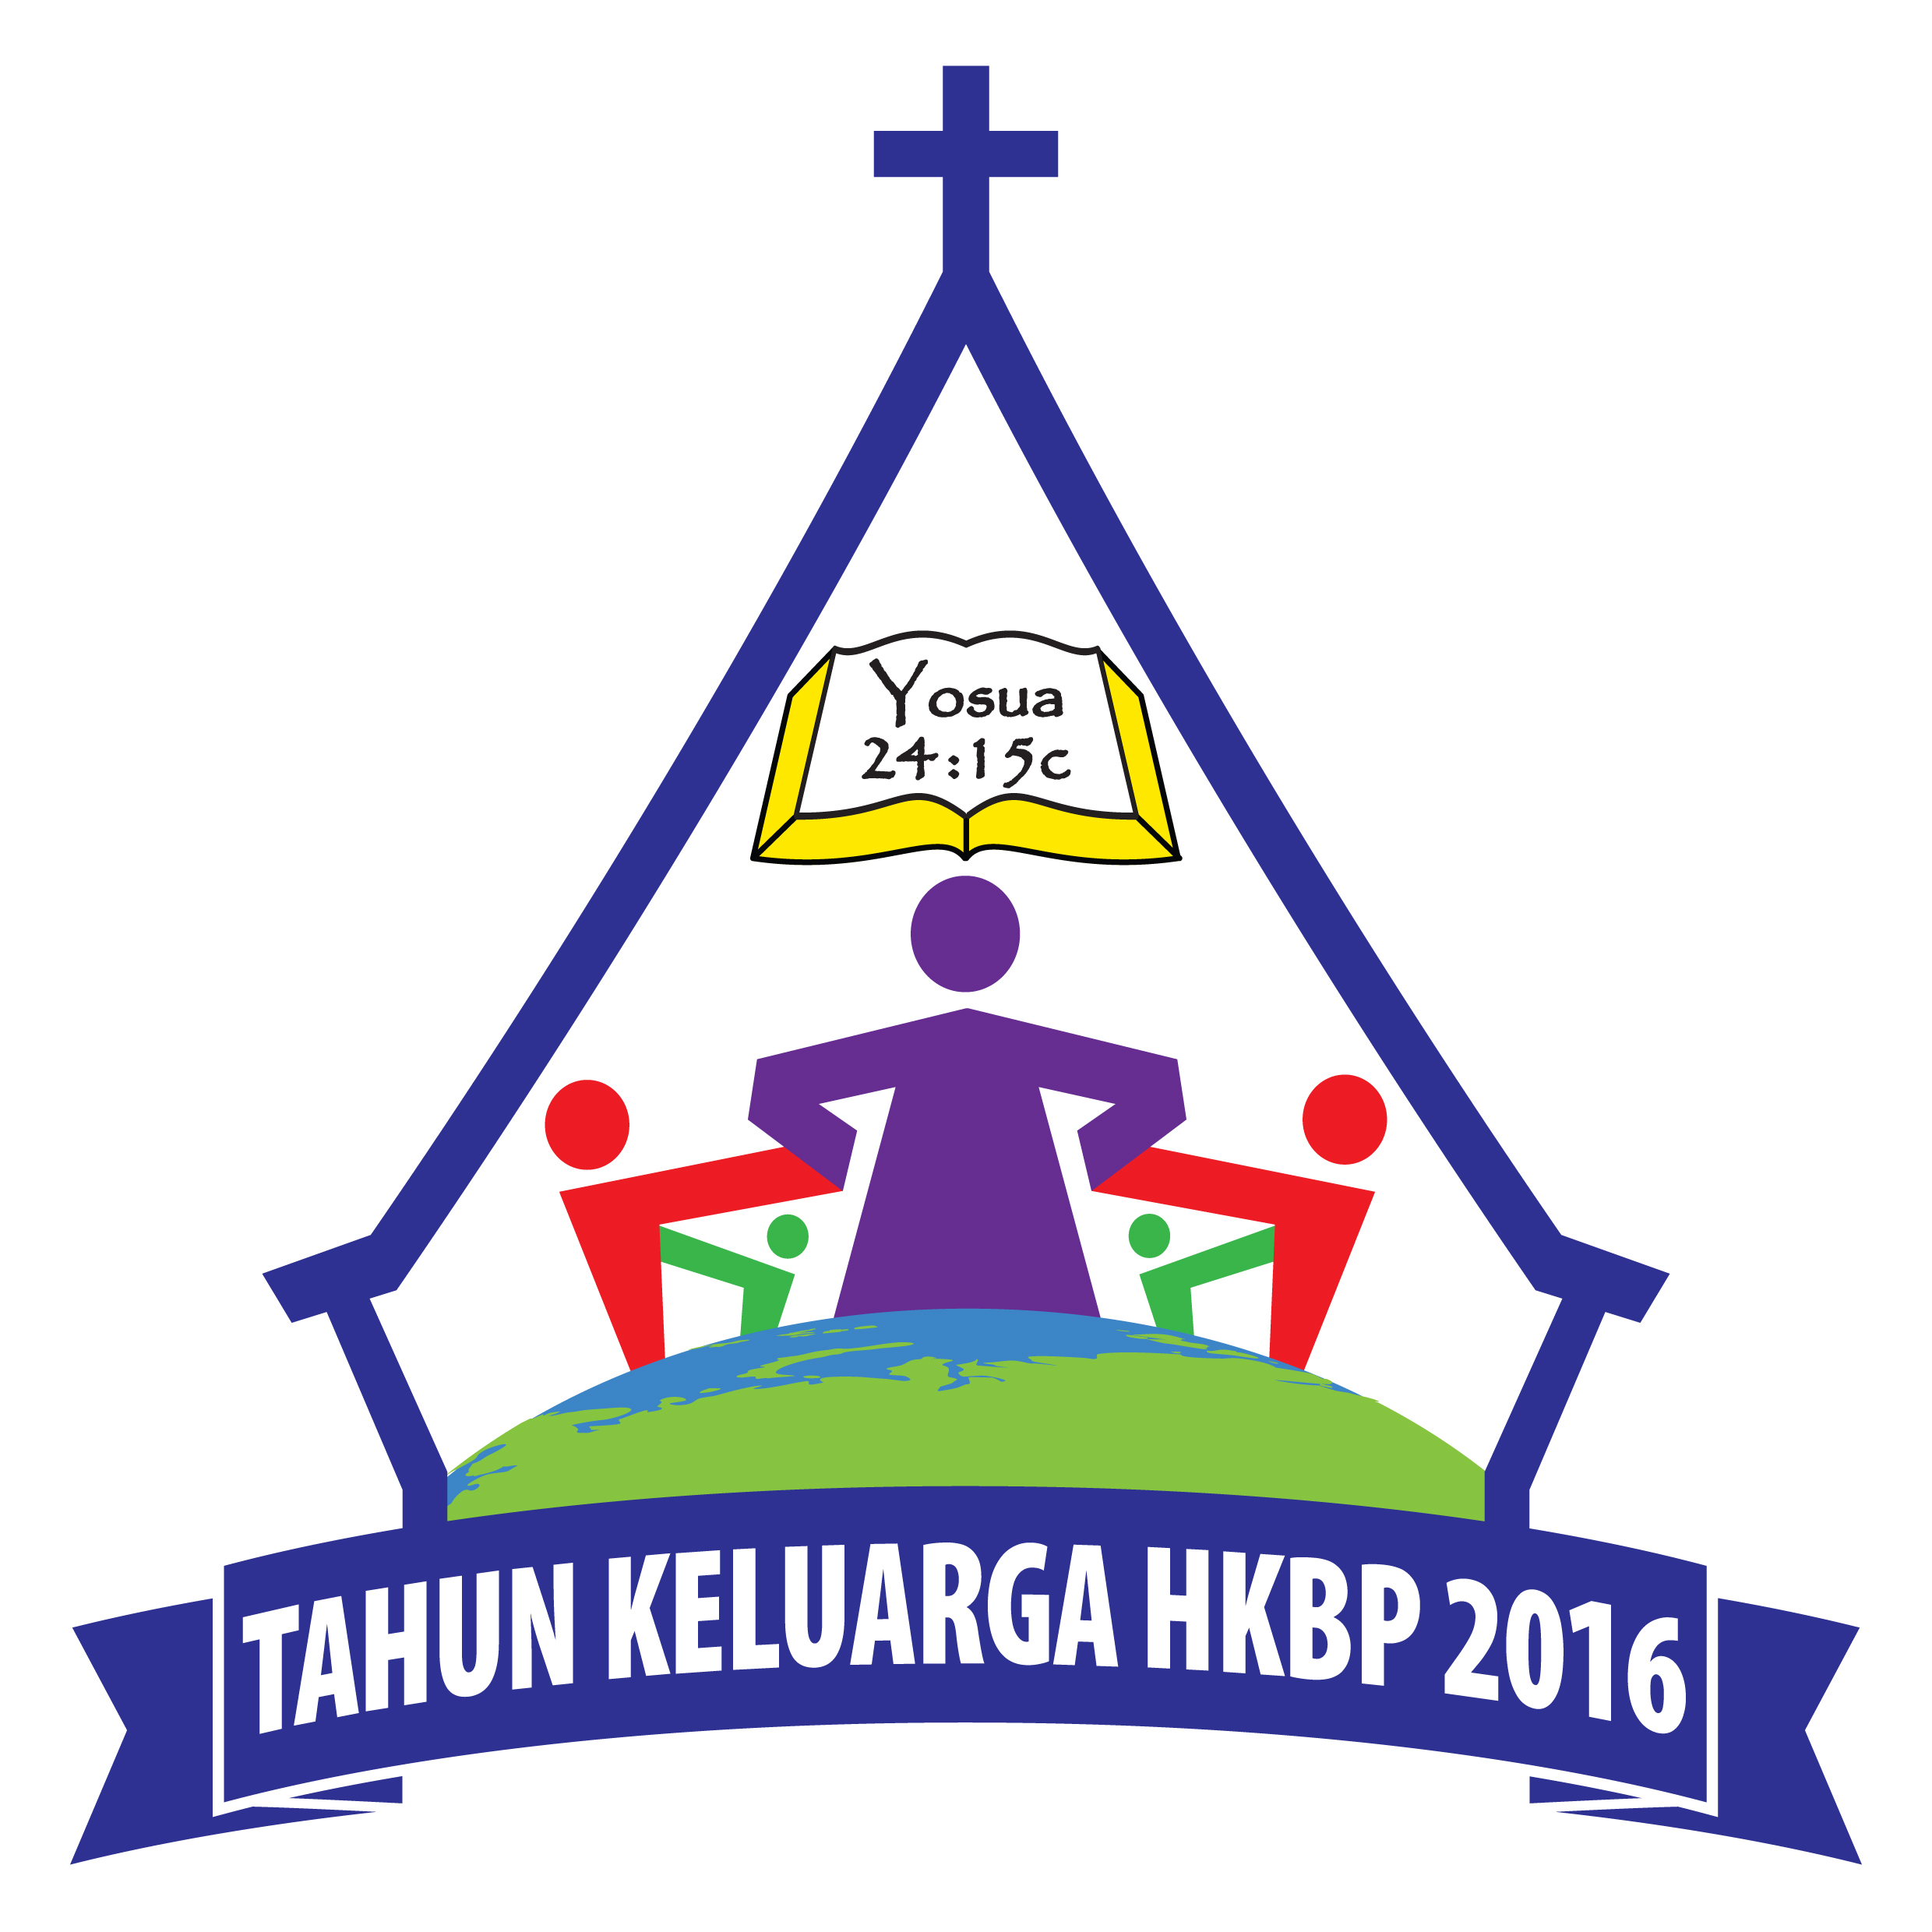 Gambar Logo Hkbp